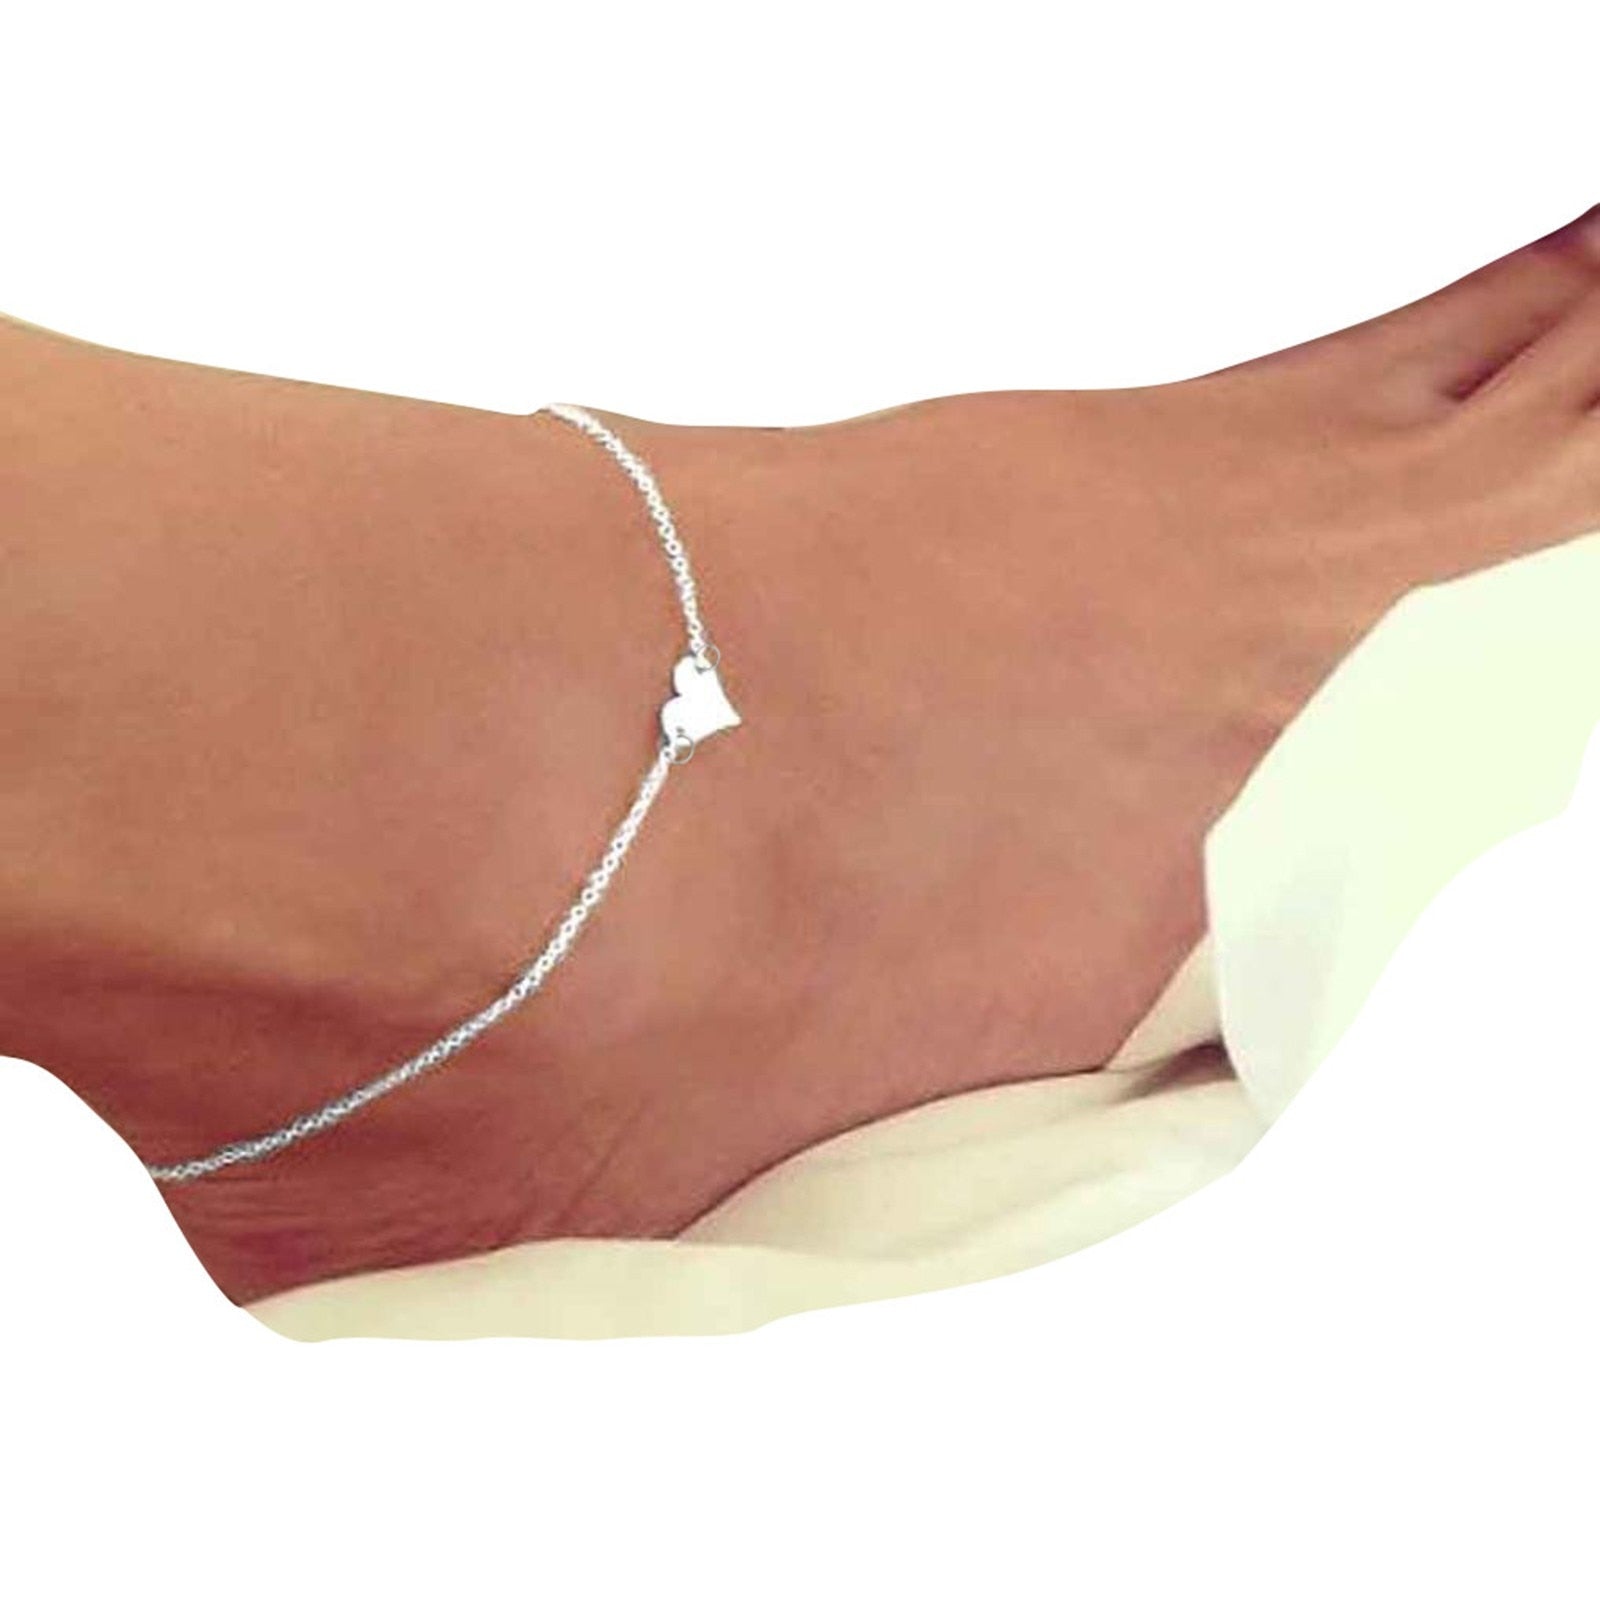 Bohemian Silver Color Anklet Bracelet On The Leg